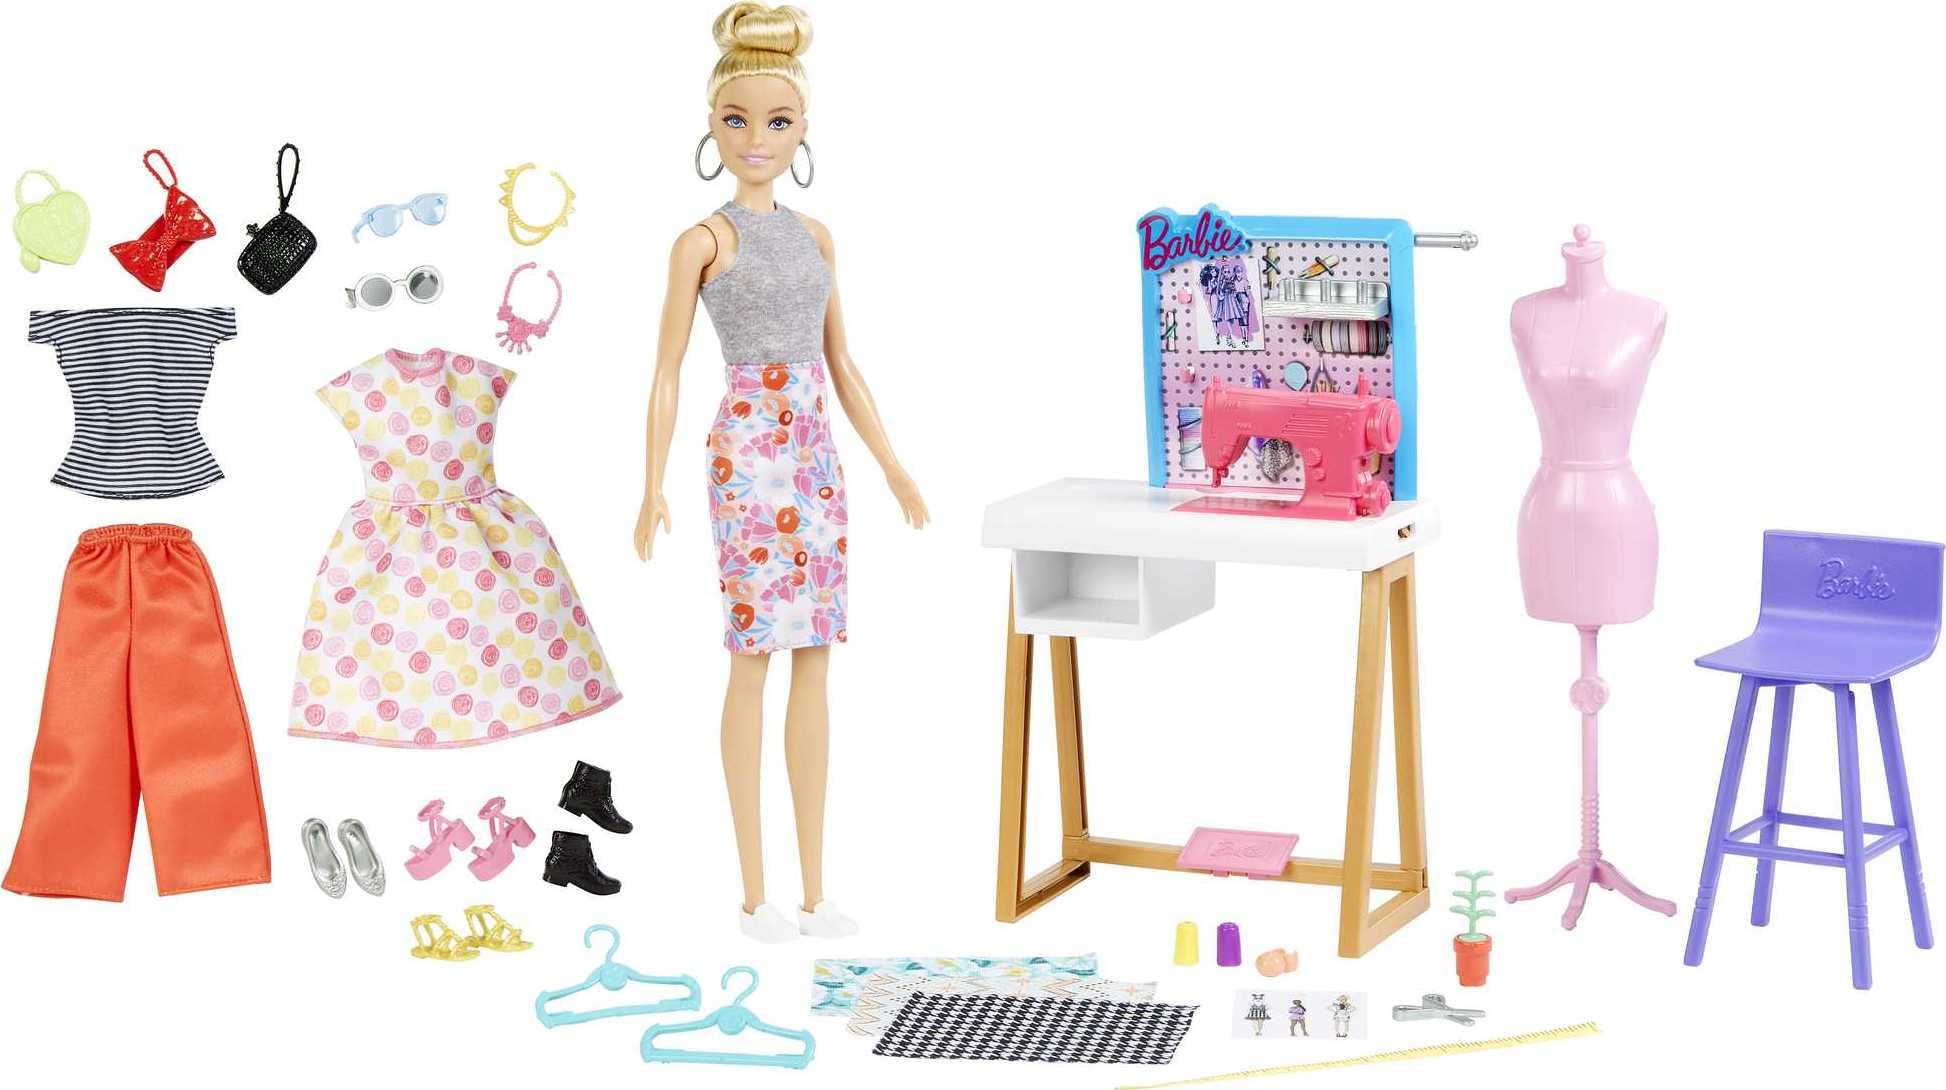 25-Piece Barbie Fashion Designer Doll w/ Design Studio Furniture, Accessories & Mannequin $12.95 + Free Shipping w/ Prime or on $25+